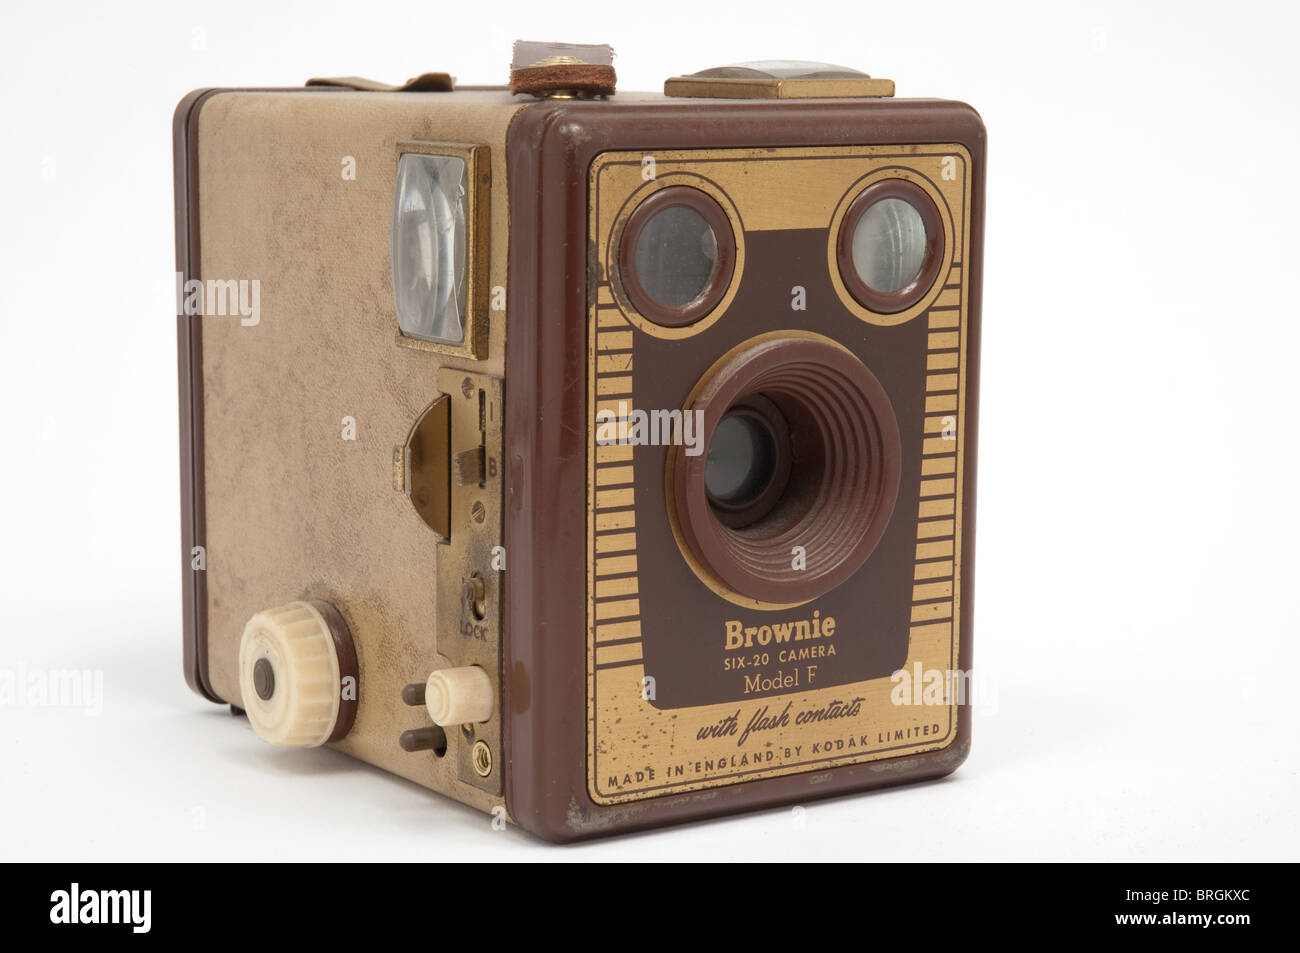 Kodak box brownie camera hi-res stock photography and images - Alamy